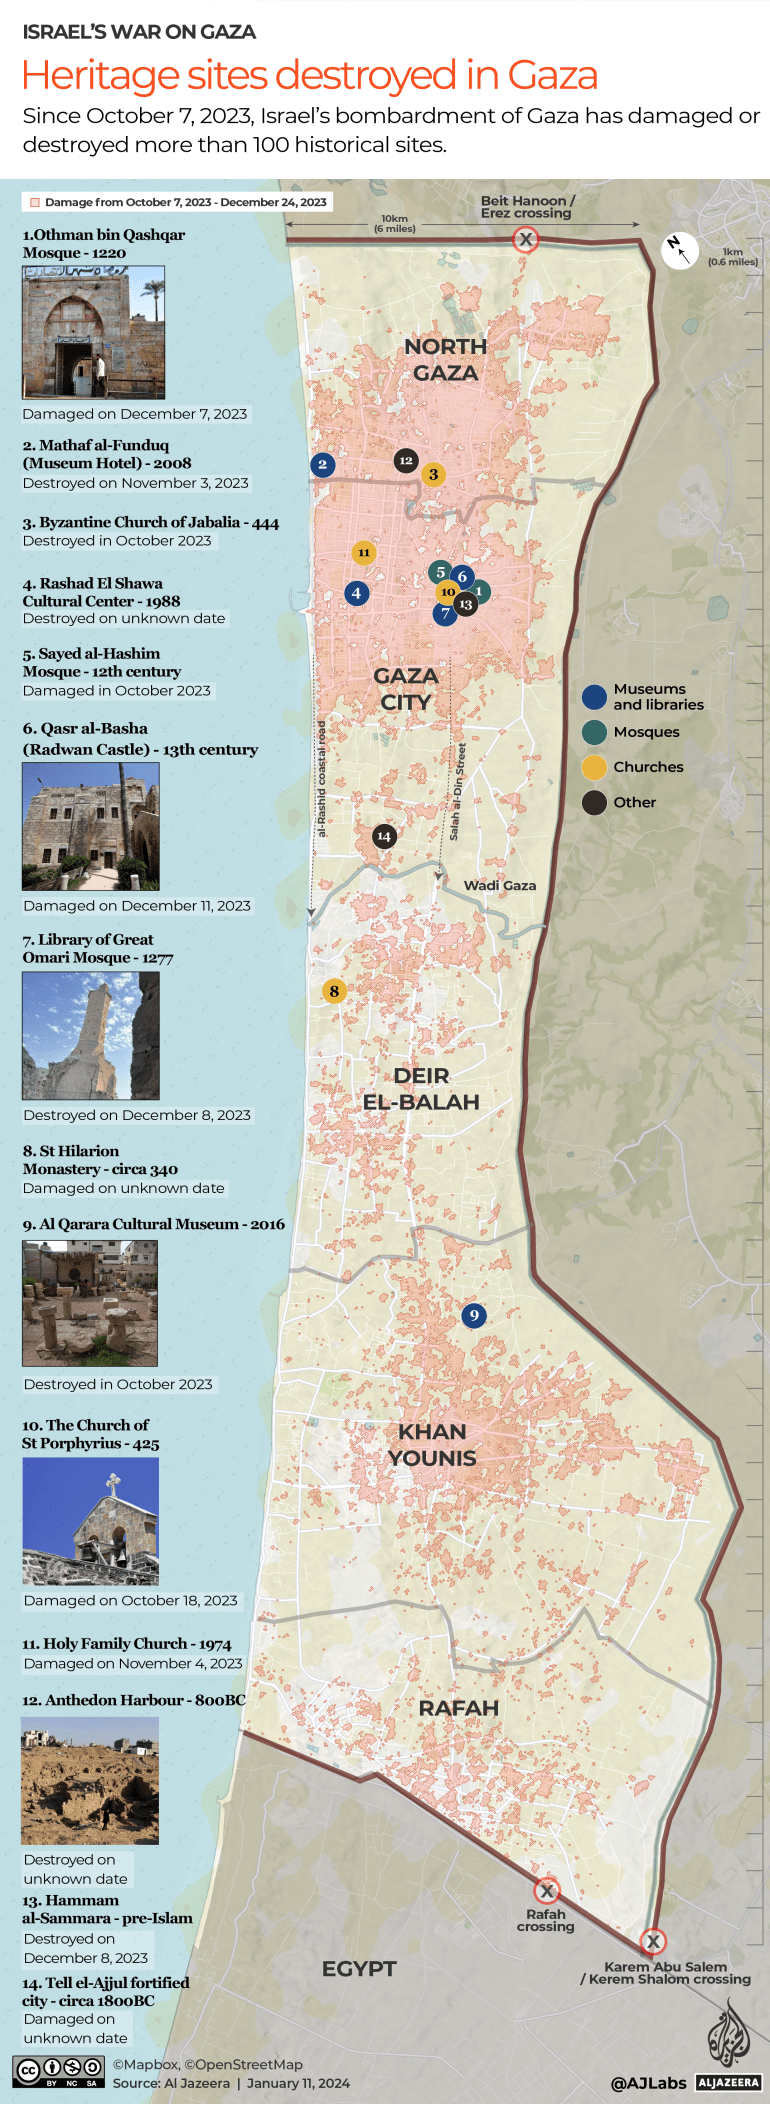 INTERACTIVE - Gaza Damaged Heritage sites Jan 11